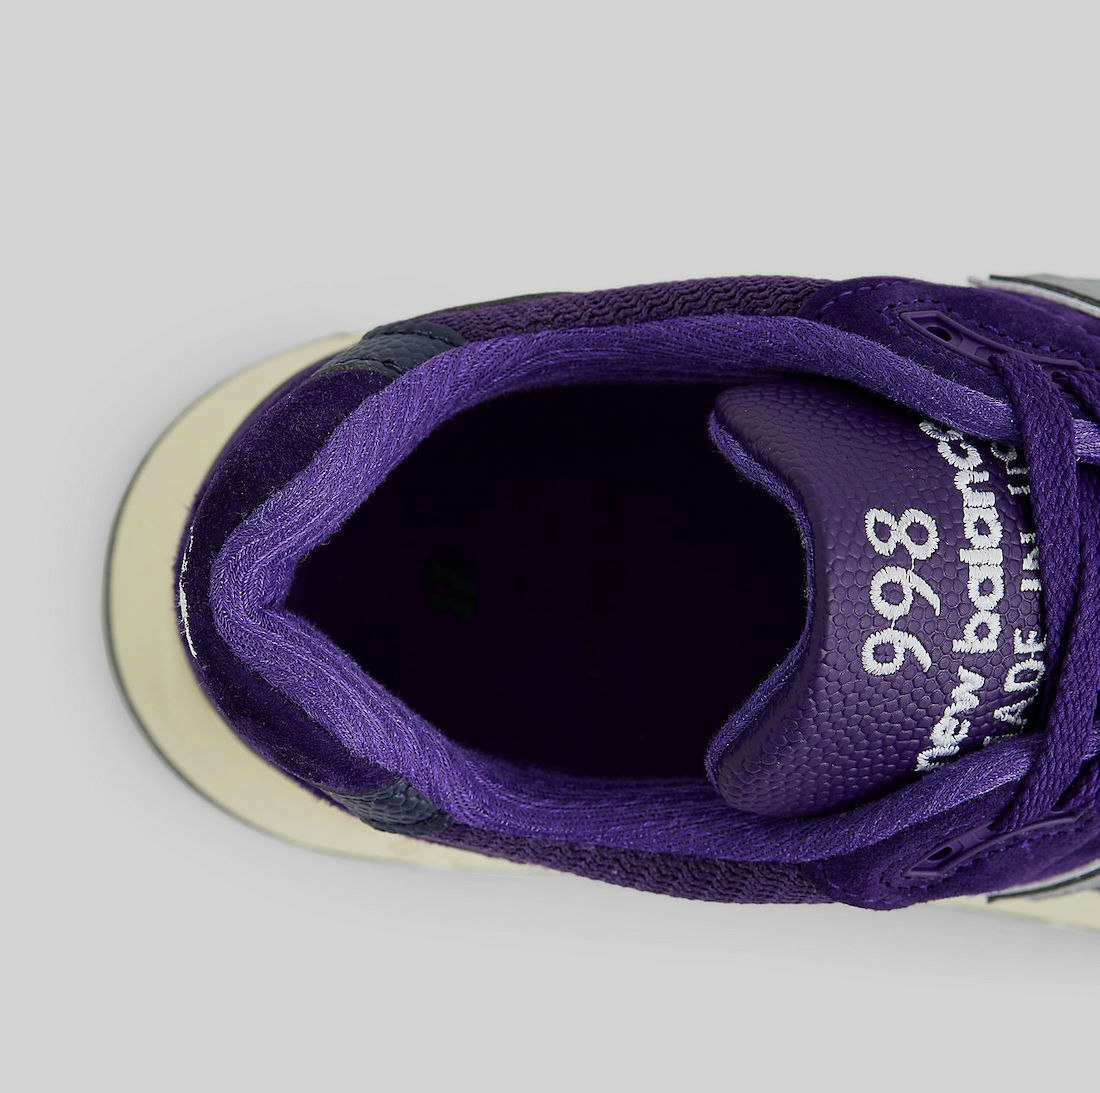 New Balance 998 "Made in USA" (Plum Purple)